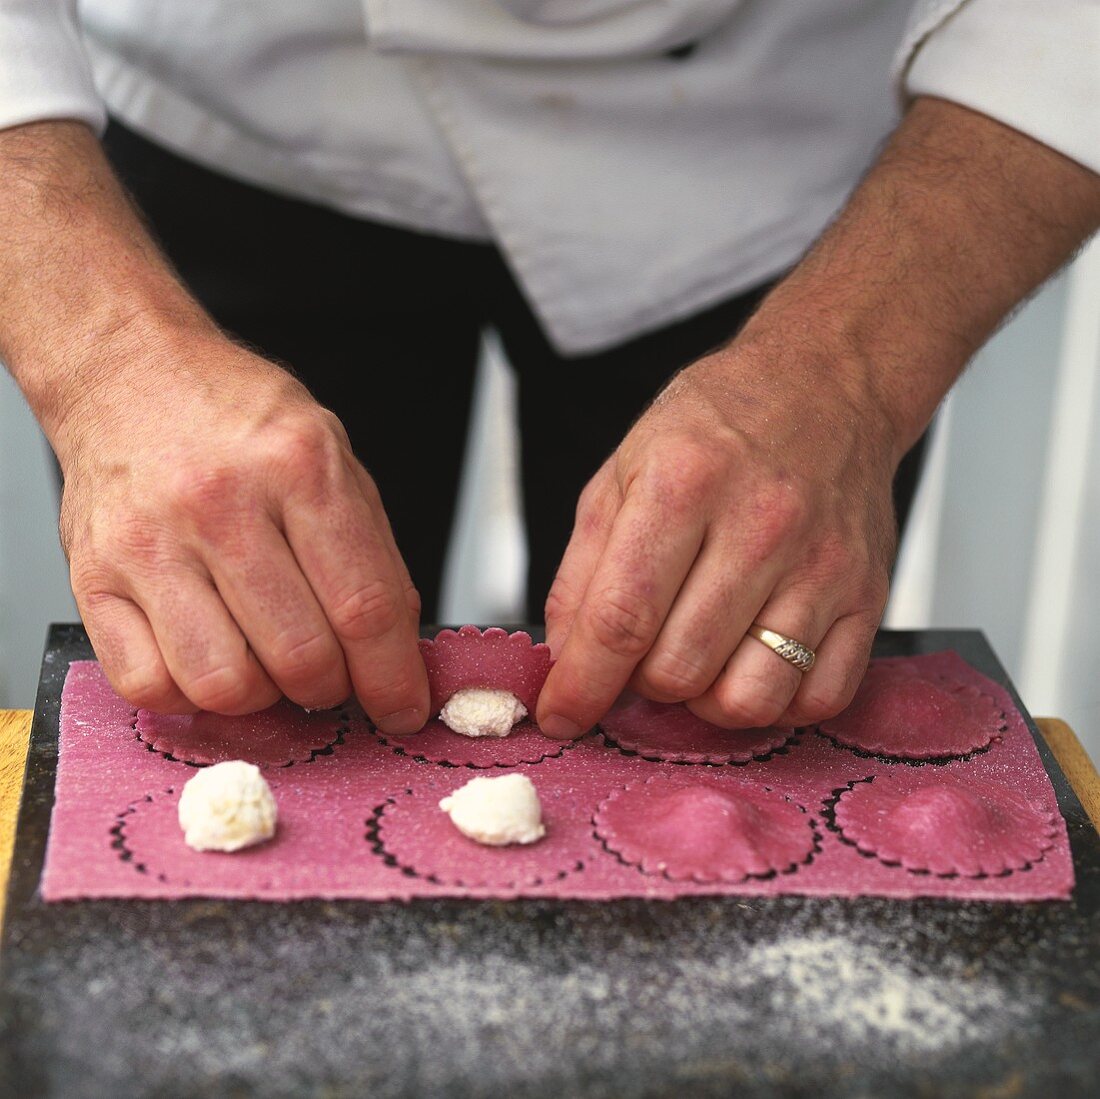 Chef filling beetroot ravioli